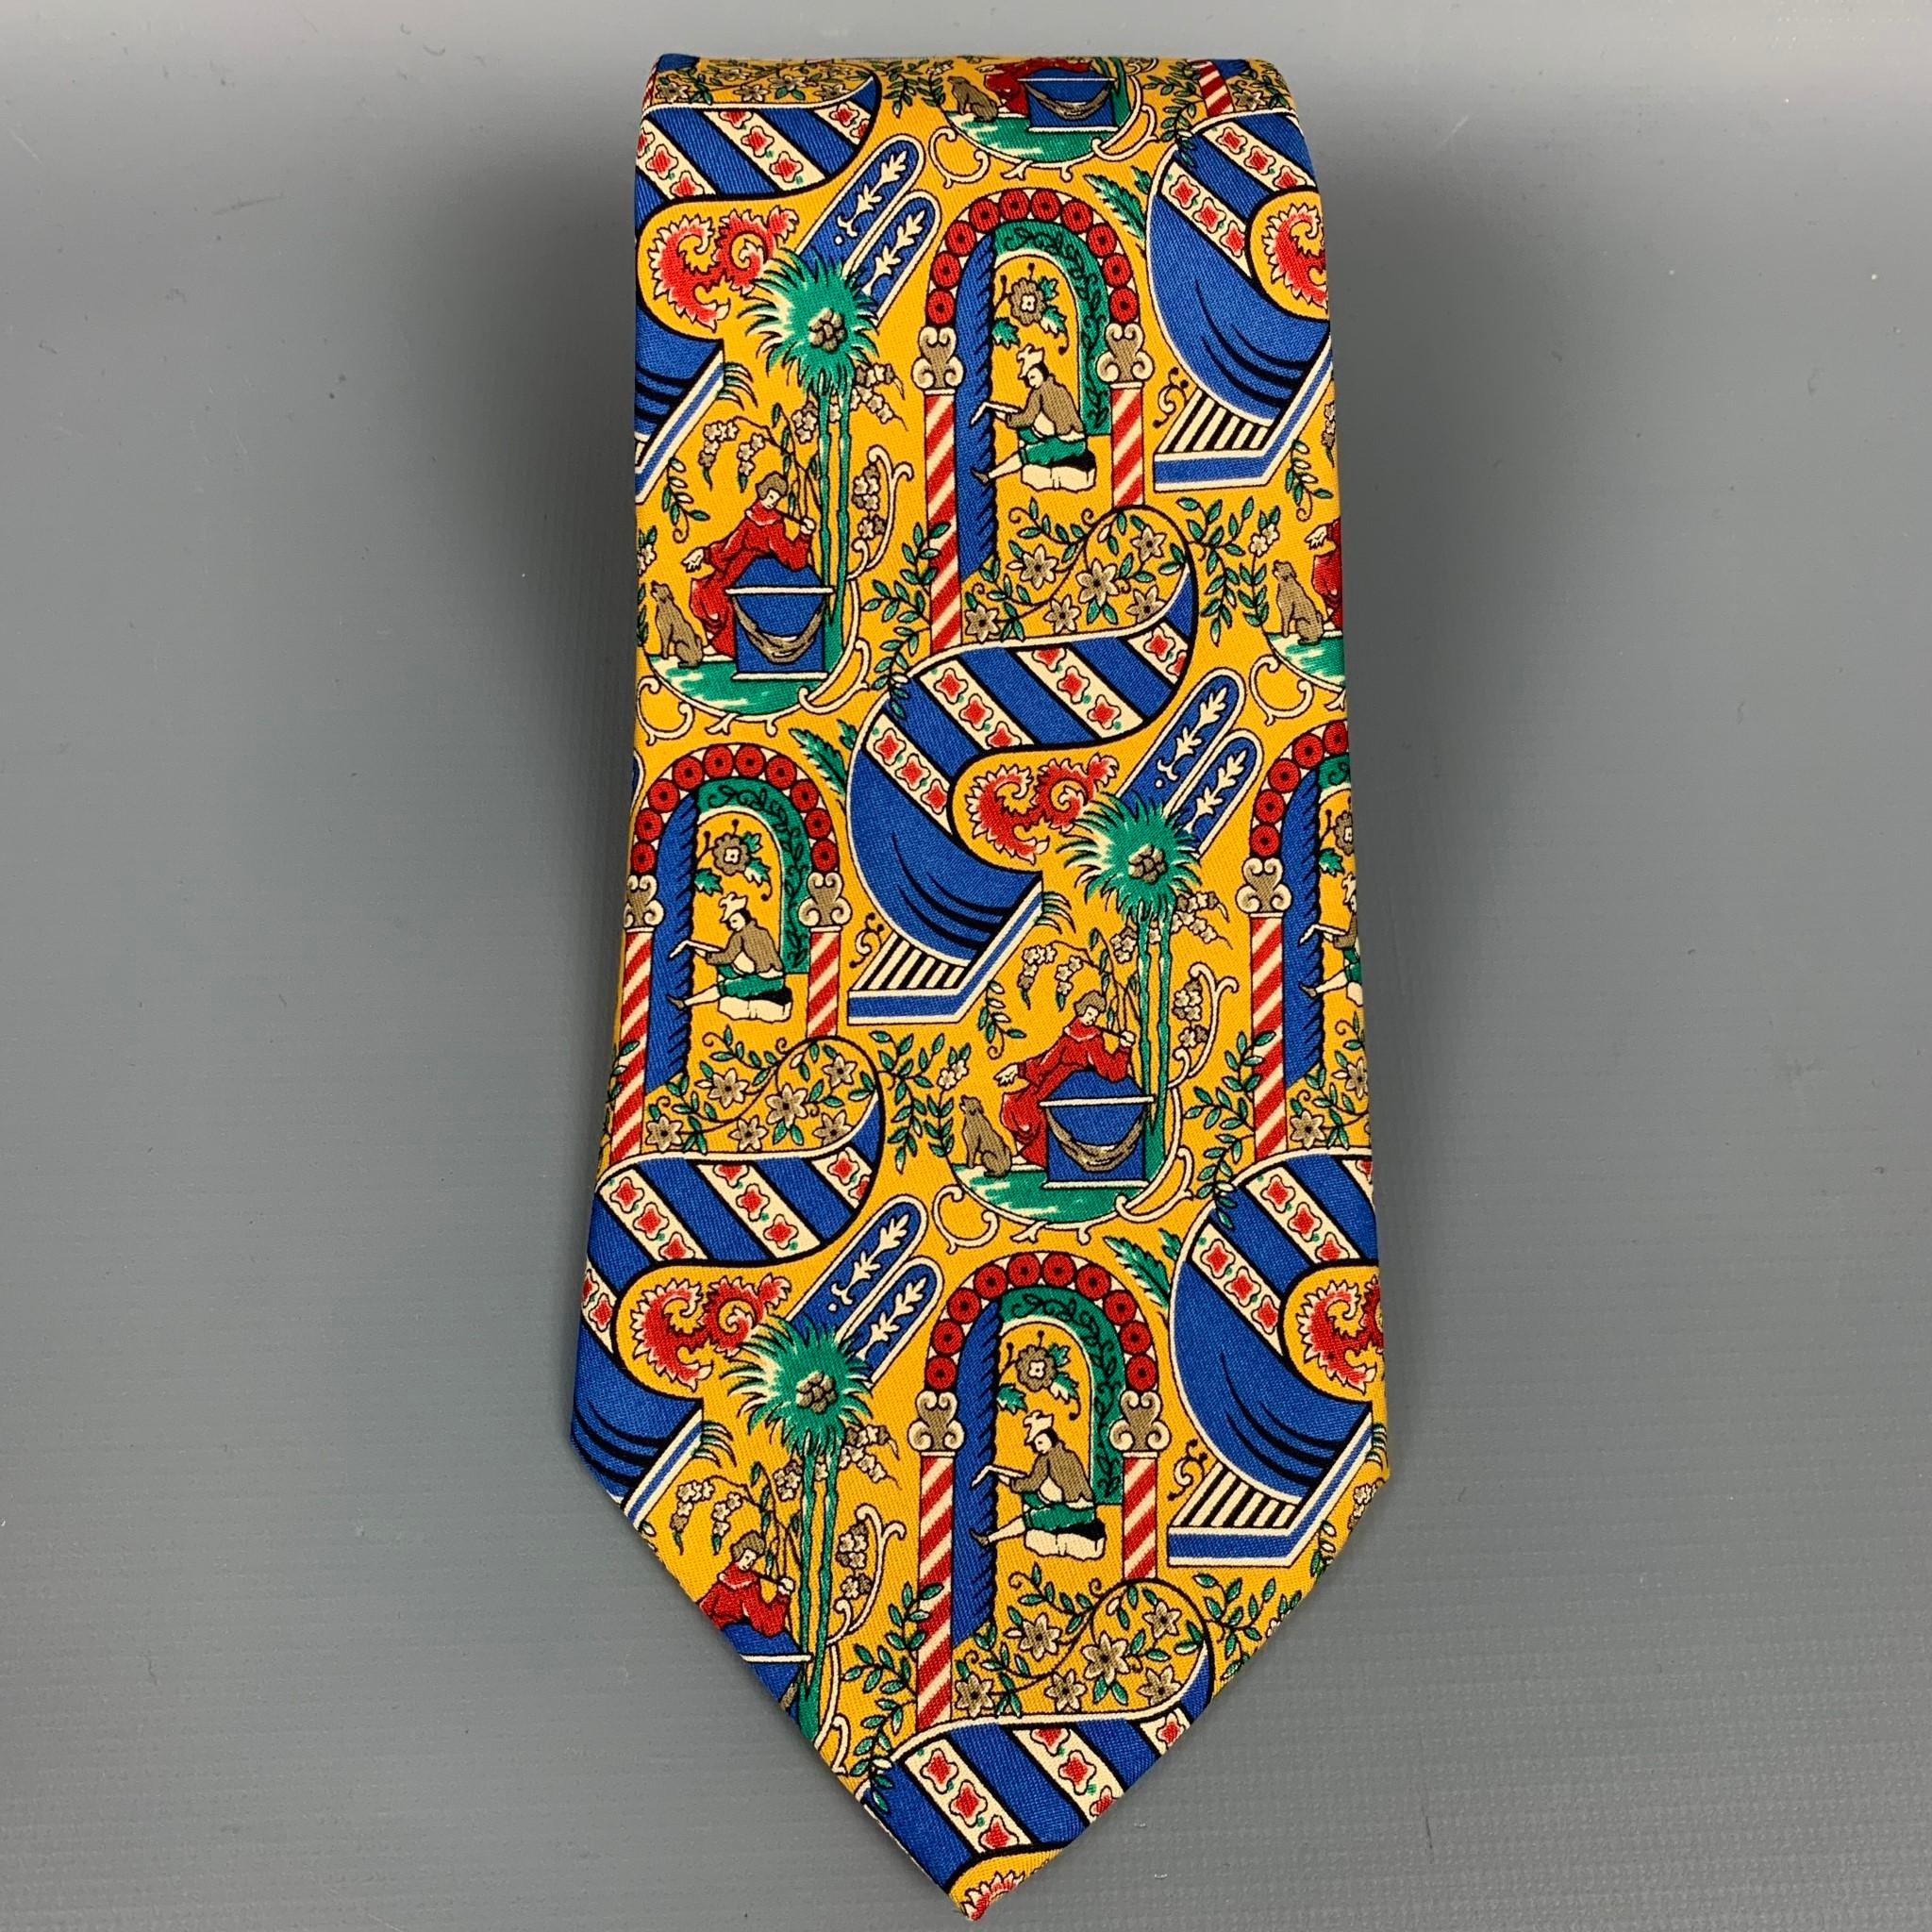 SALVATORE FERRAGAMO neck tie comes in a multi-color print silk. Made in Italy.

Very Good Pre-Owned Condition.

Measurements:

Width: 3.5 in.  